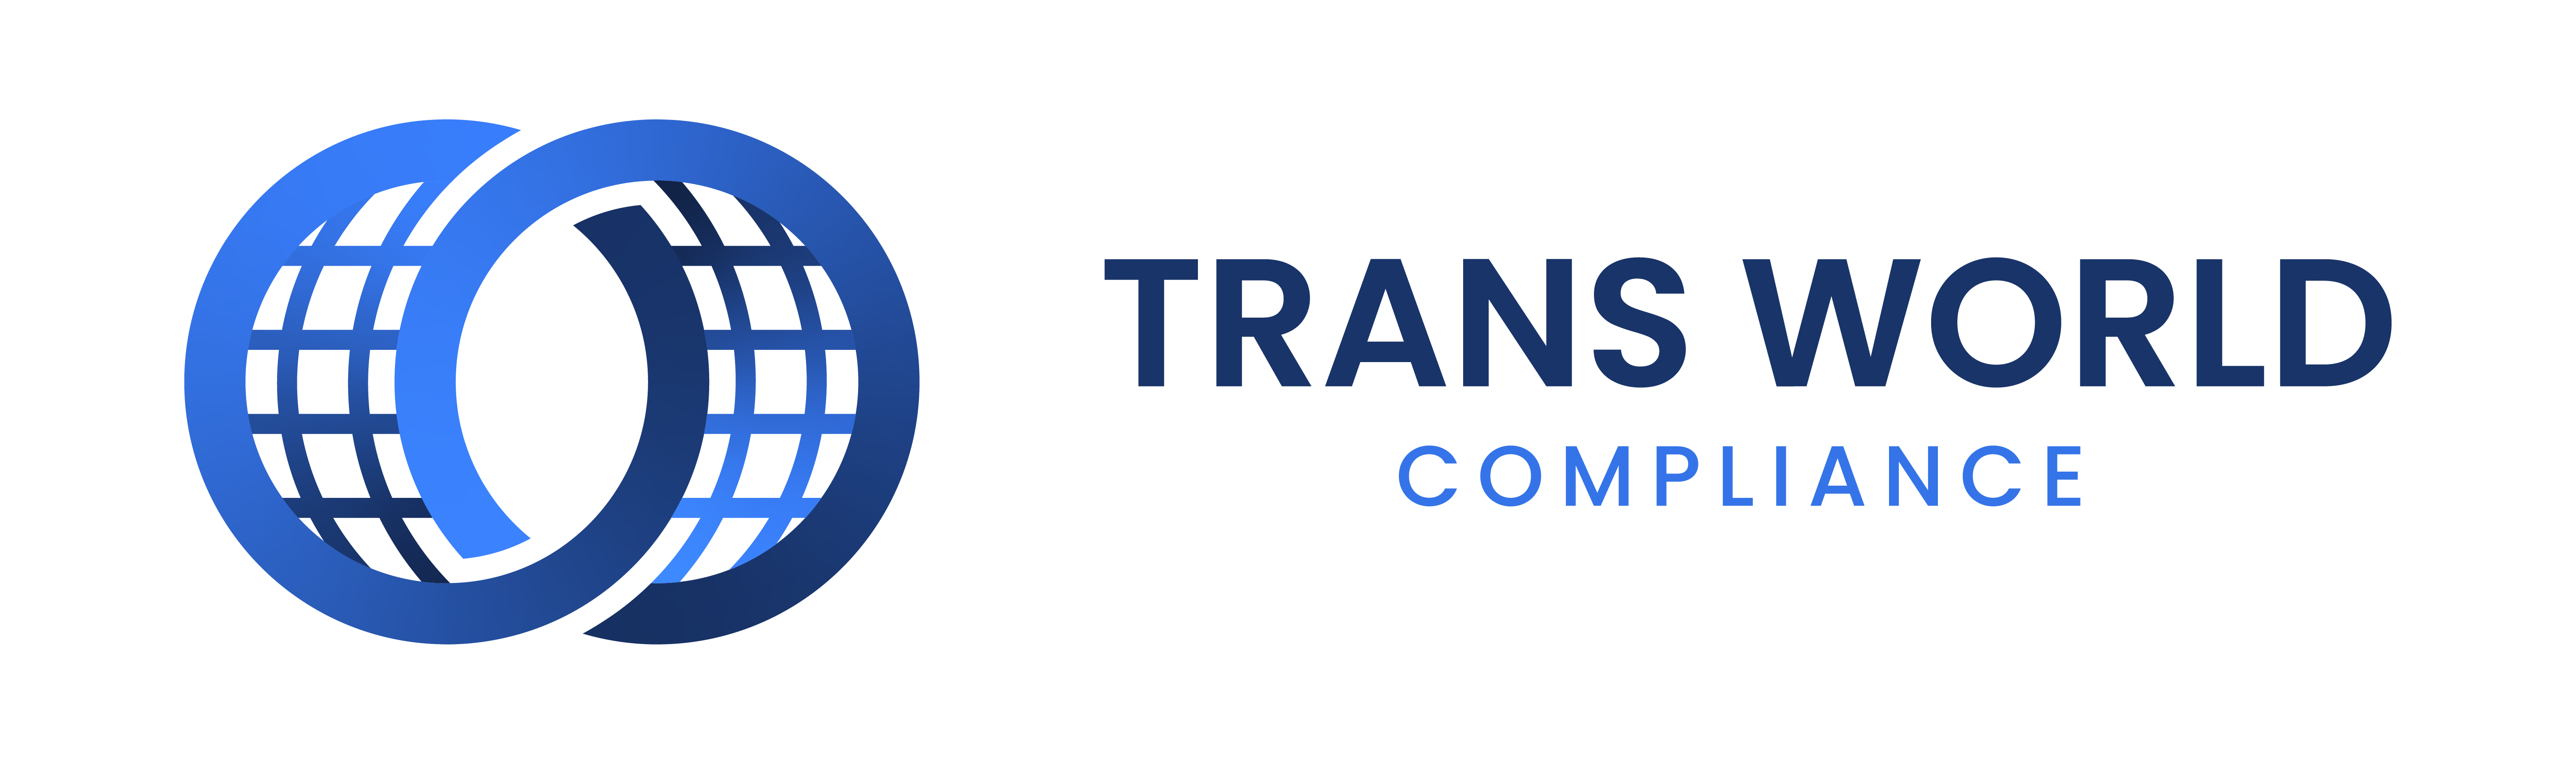 Trans World Compliance